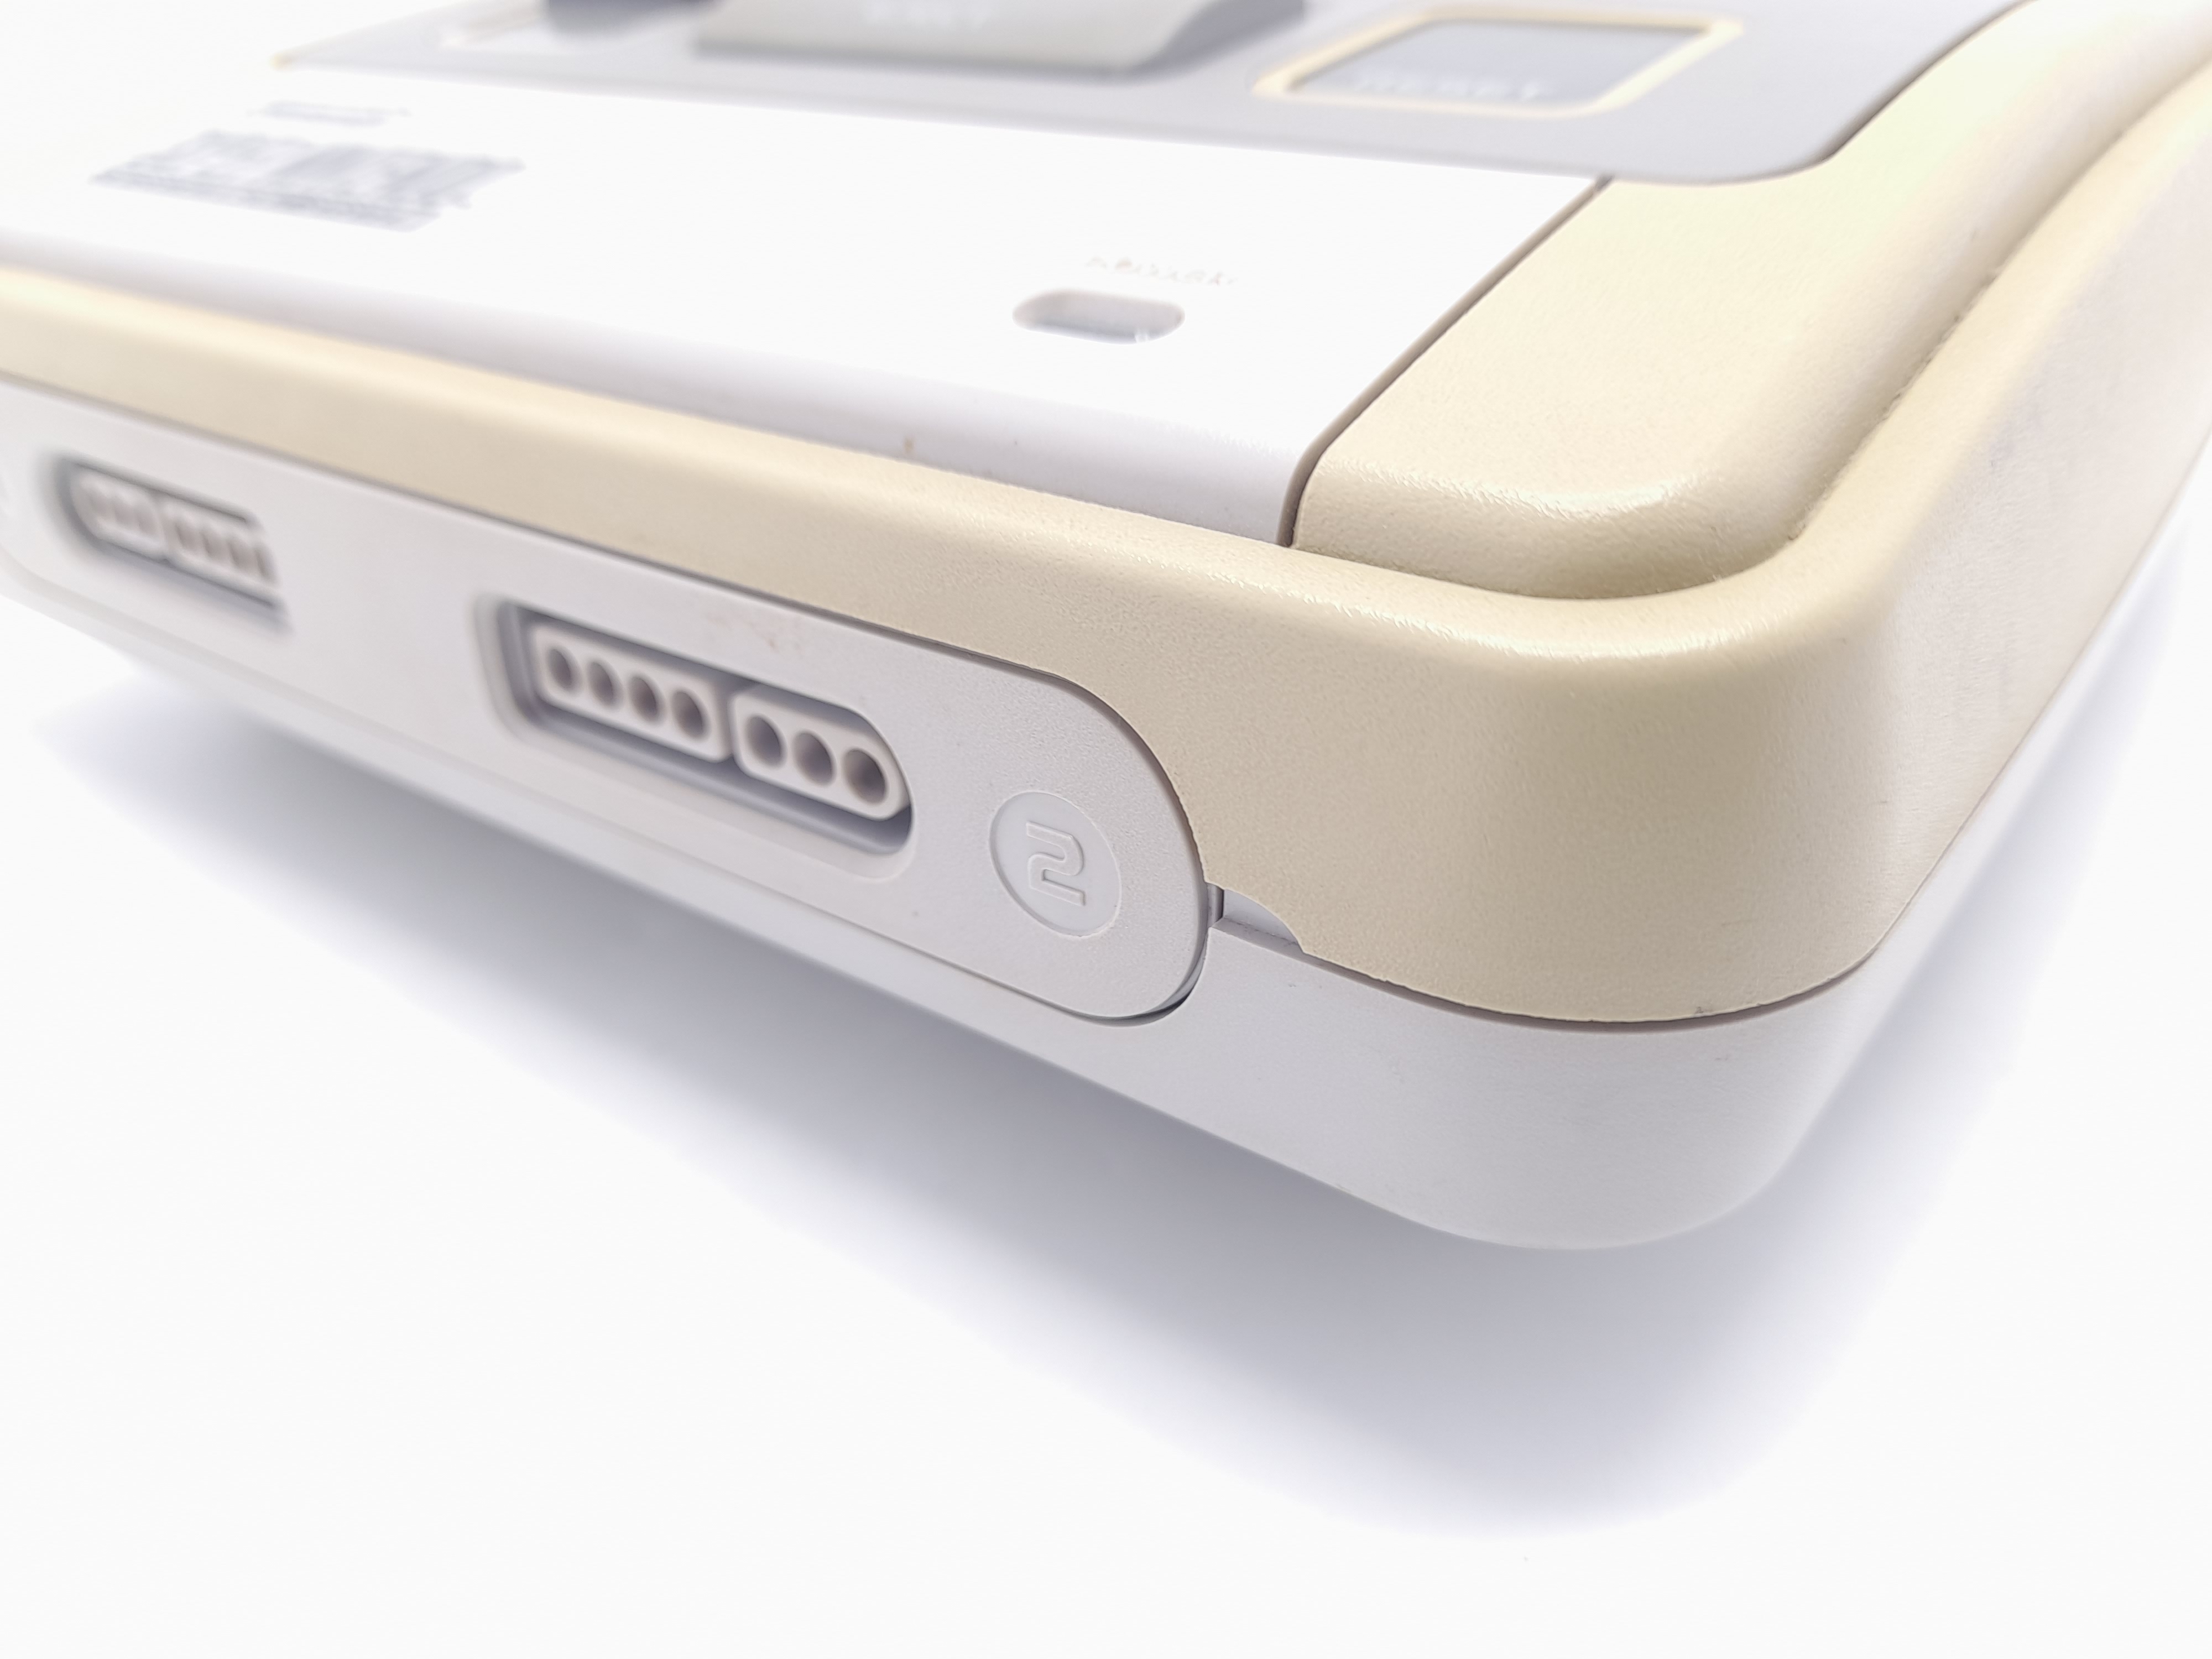 Foto van Super Nintendo Losse Console Verkleurd